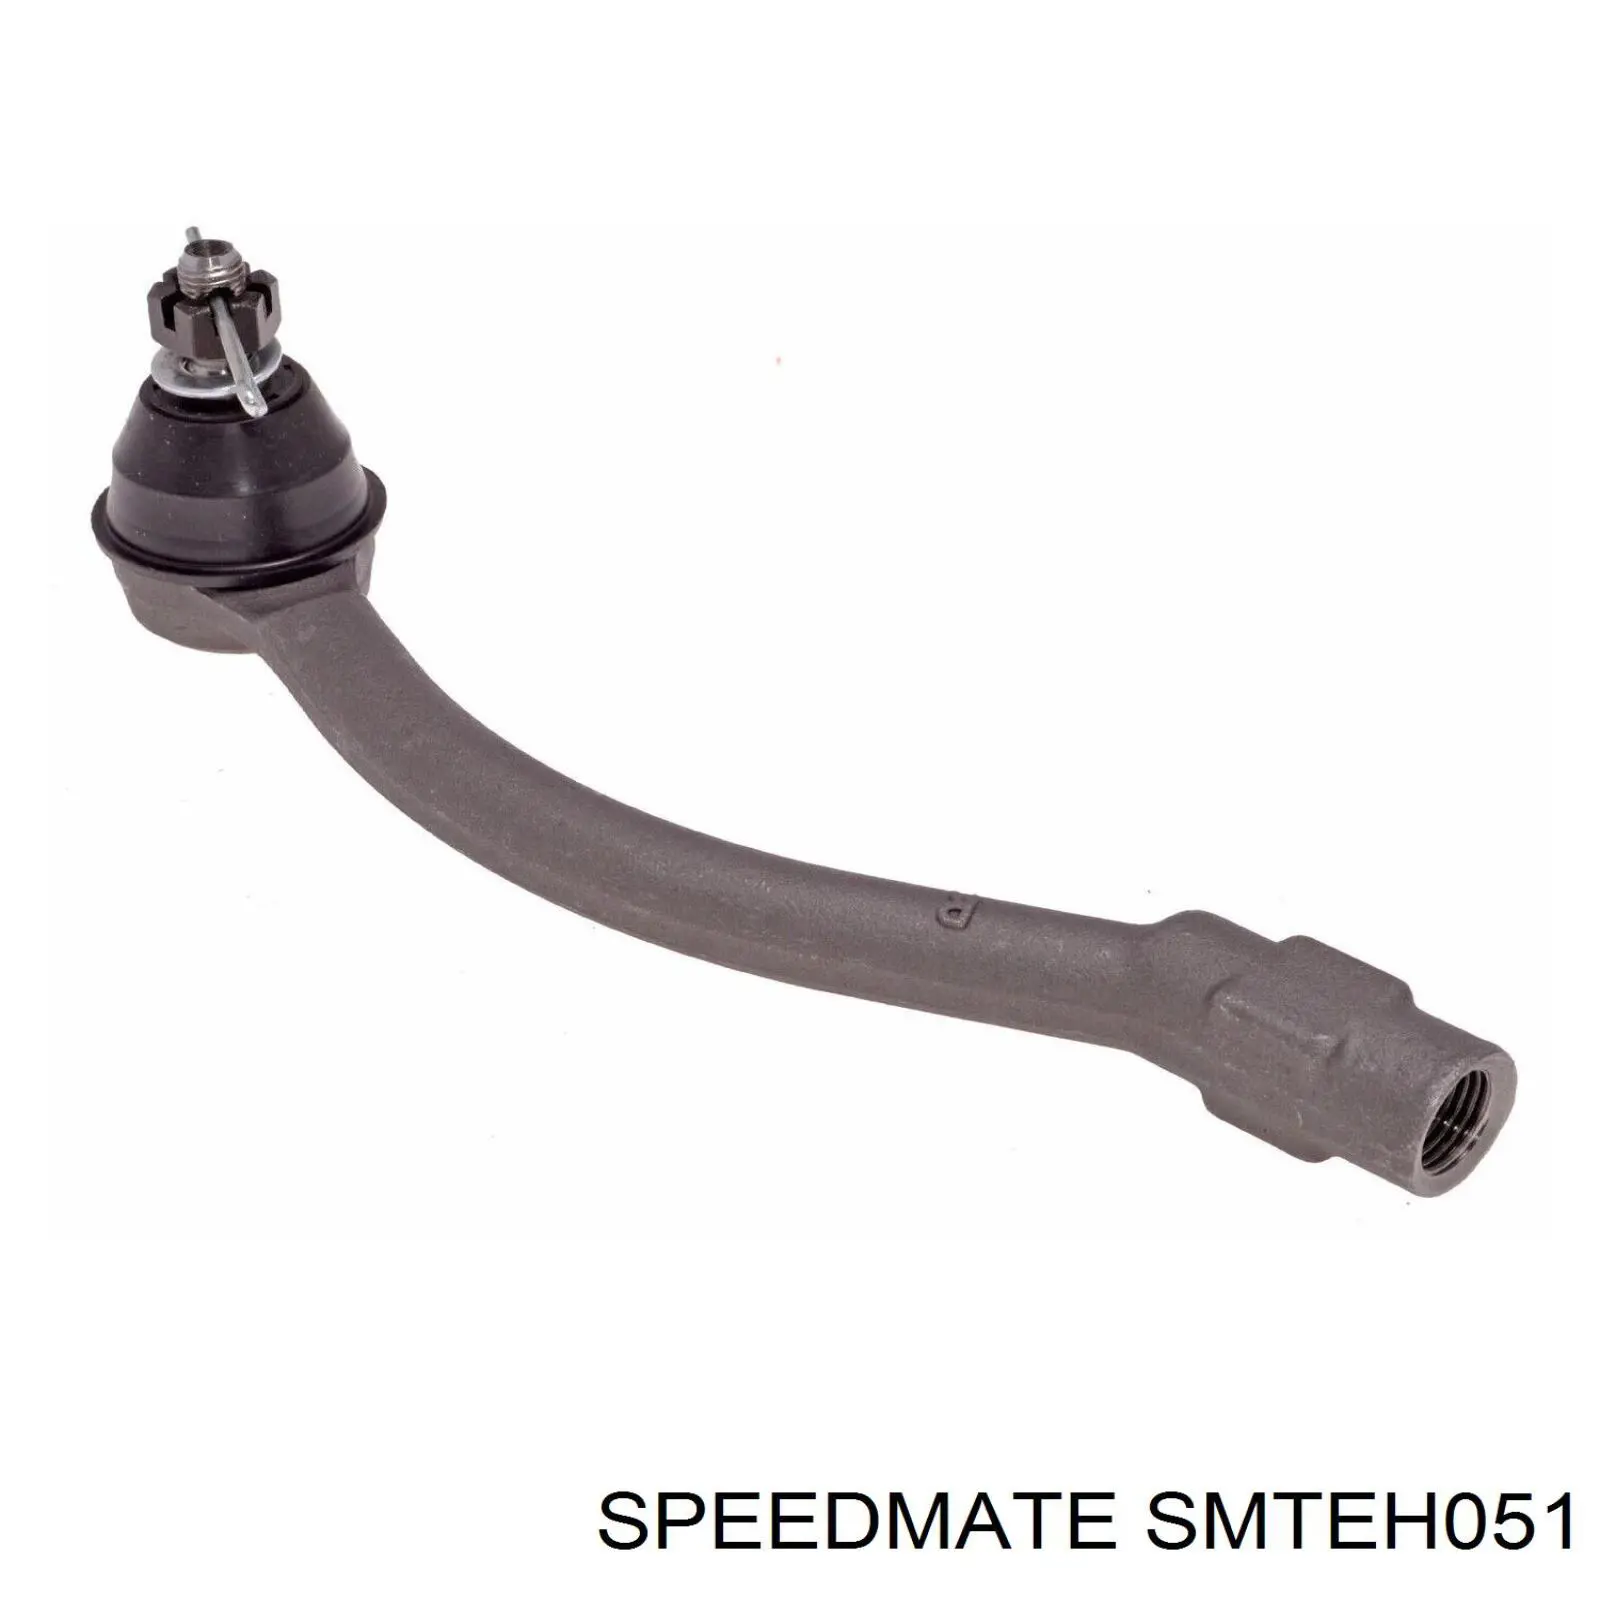 SM-TEH051 Speedmate rótula barra de acoplamiento exterior